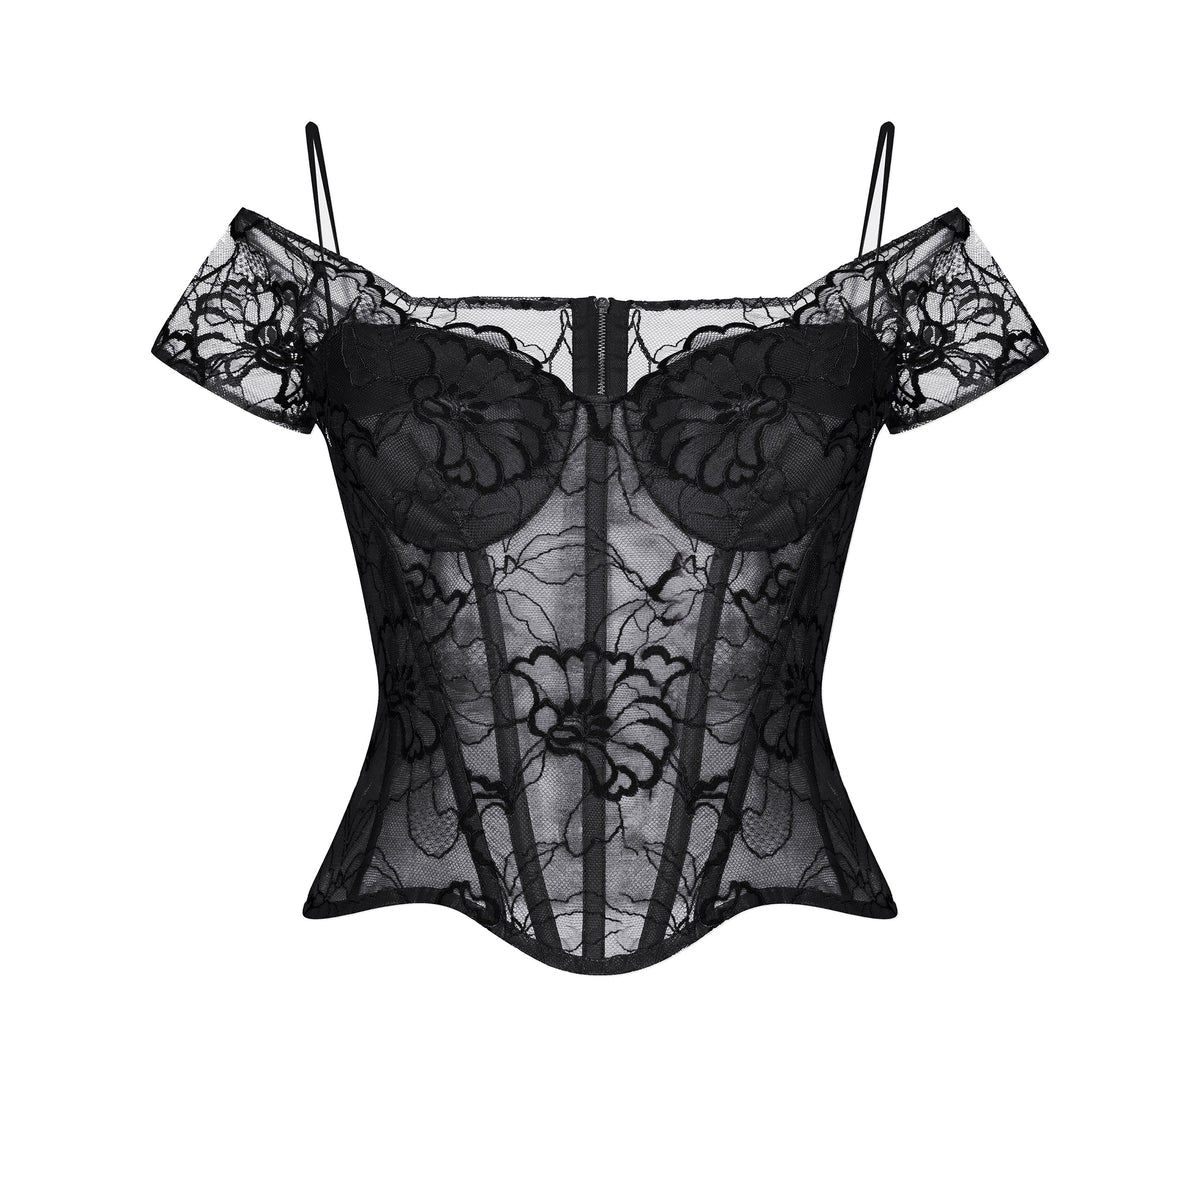 Off-shoulder lace bustier corset top Black RC23S008A001 - buy at